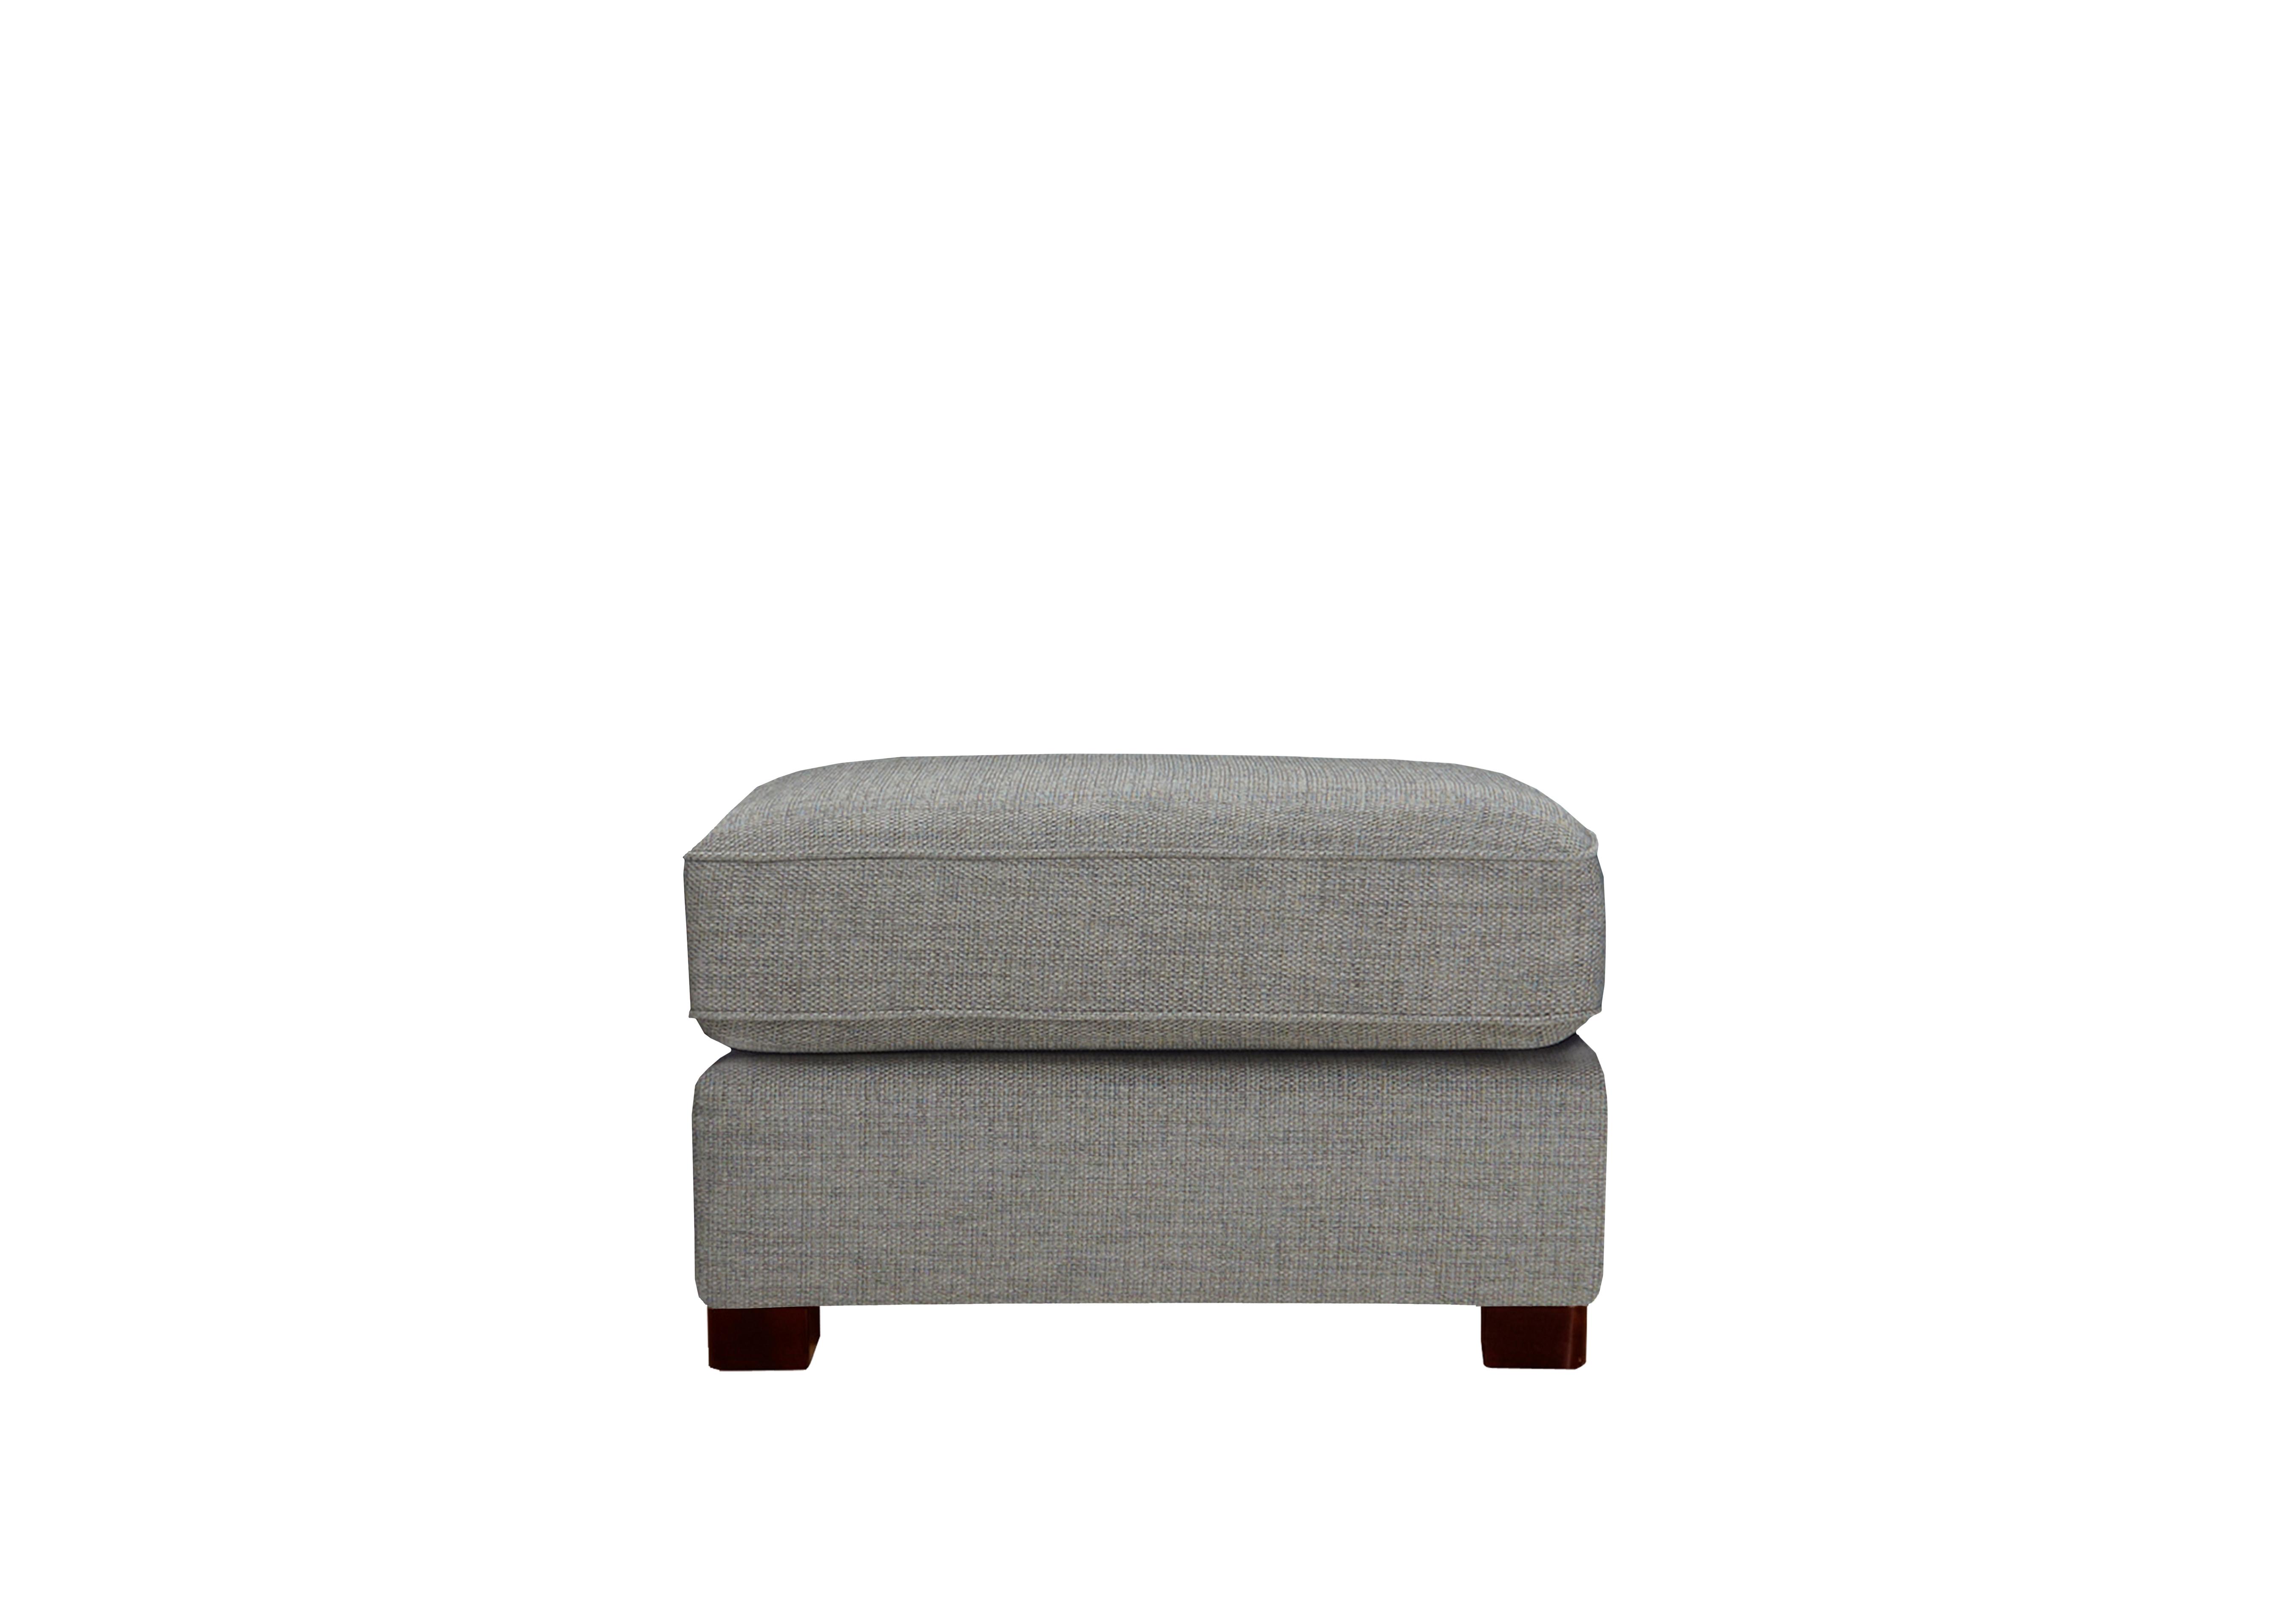 Elora Small Fabric Storage Footstool in Kento 301 Warm Grey Dbf on Furniture Village